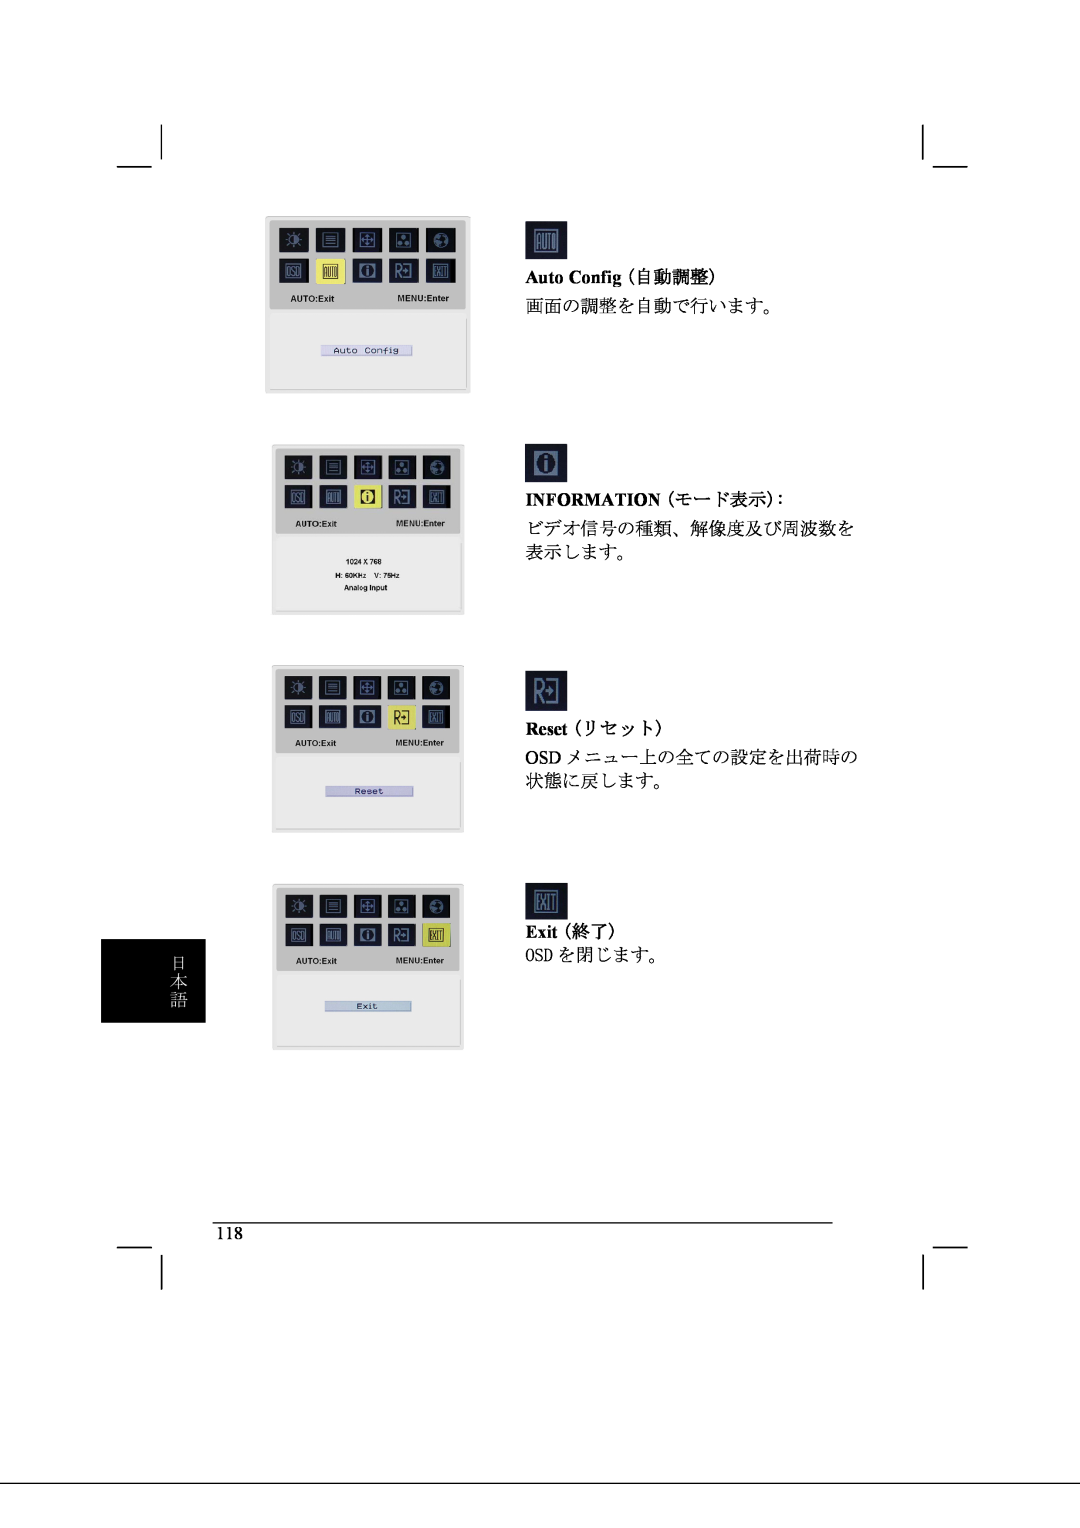 Acer AL2021 manual 日 本 語, Auto Config 自動調整, 画面の調整を自動で行います。, Information モード表示, Reset リセット, Exit 終了, Osd を閉じます。 